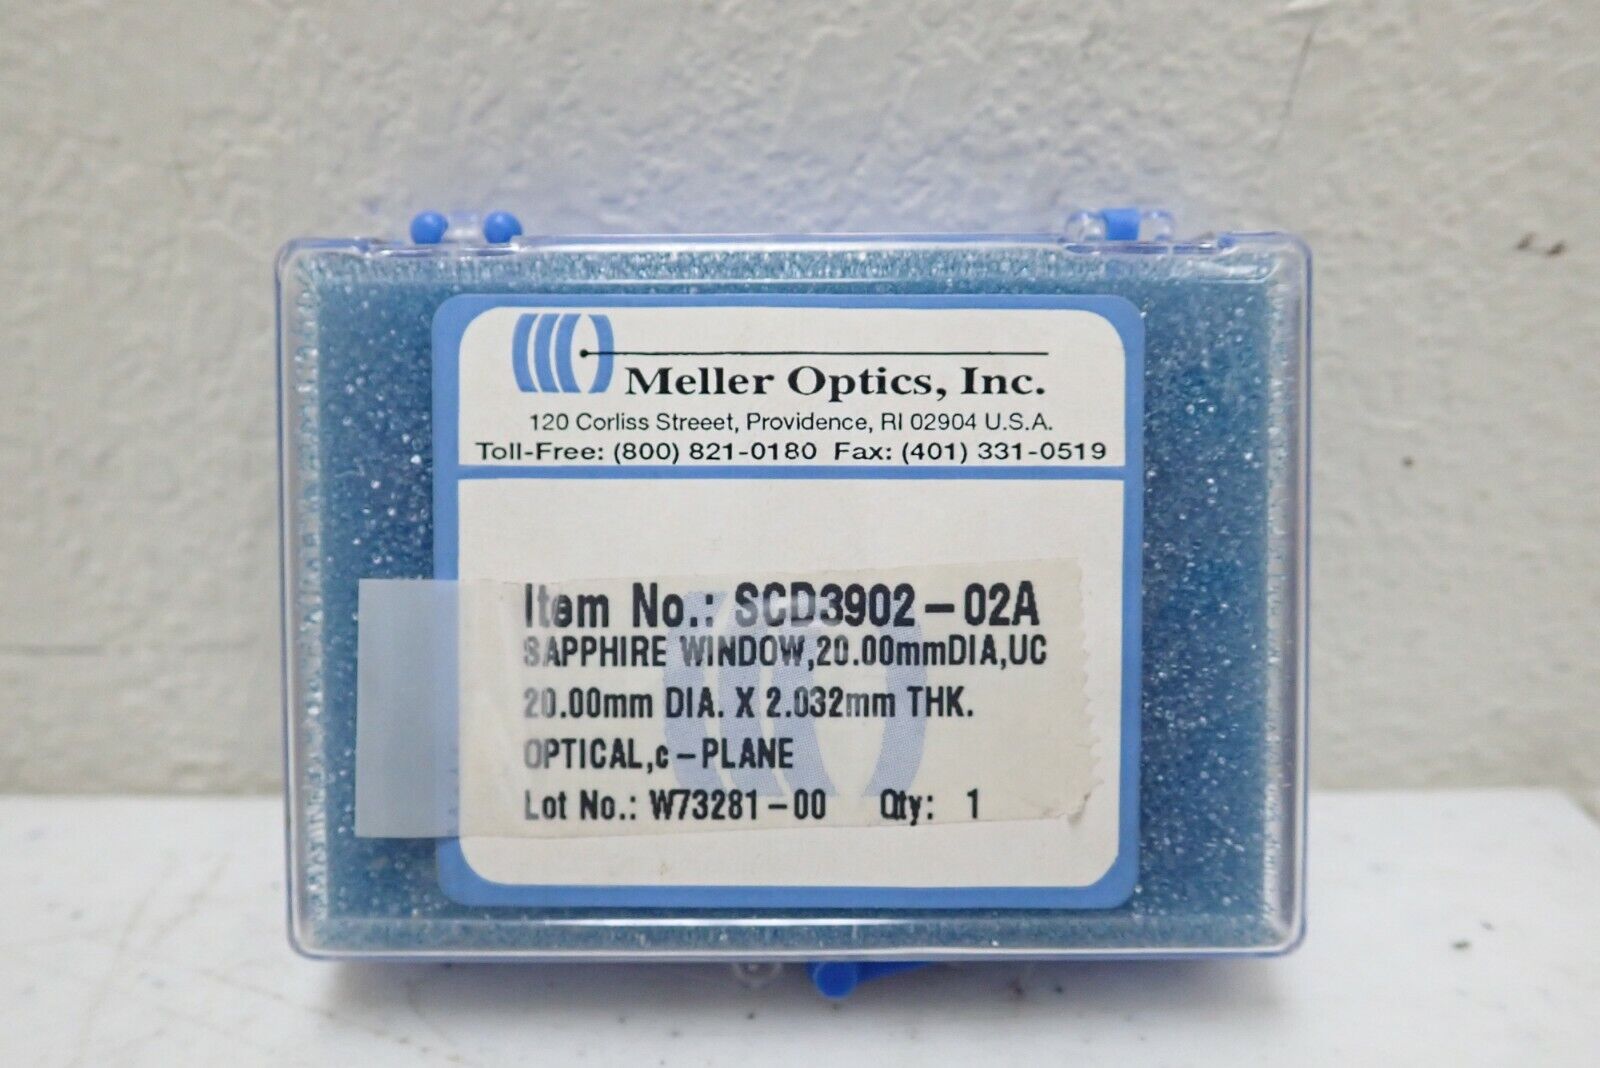 Meller Optics SCD3902-02A SAPPHIRE WINDOW 20.00mm DIA. X 2.032mm THK